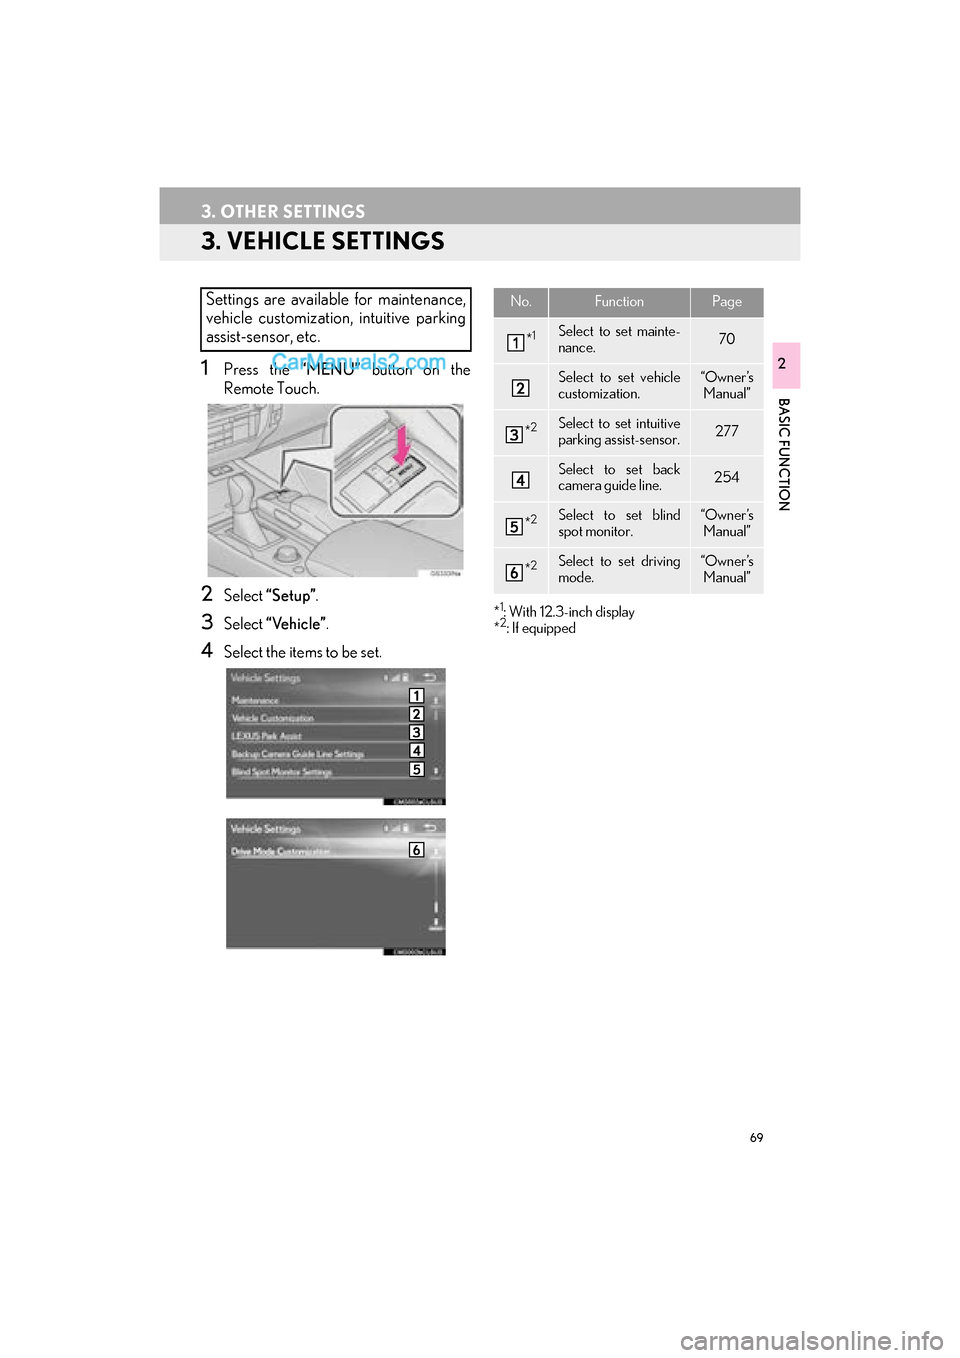 Lexus GS F 2016  Navigation Manual 69
3. OTHER SETTINGS
GS_Navi+MM_OM30F12U_(U)15.09.01     12:22
BASIC FUNCTION
2
3. VEHICLE SETTINGS
1Press the “MENU” button on the
Remote Touch.
2Select  “Setup” .
3Select “Vehicle” .
4Se